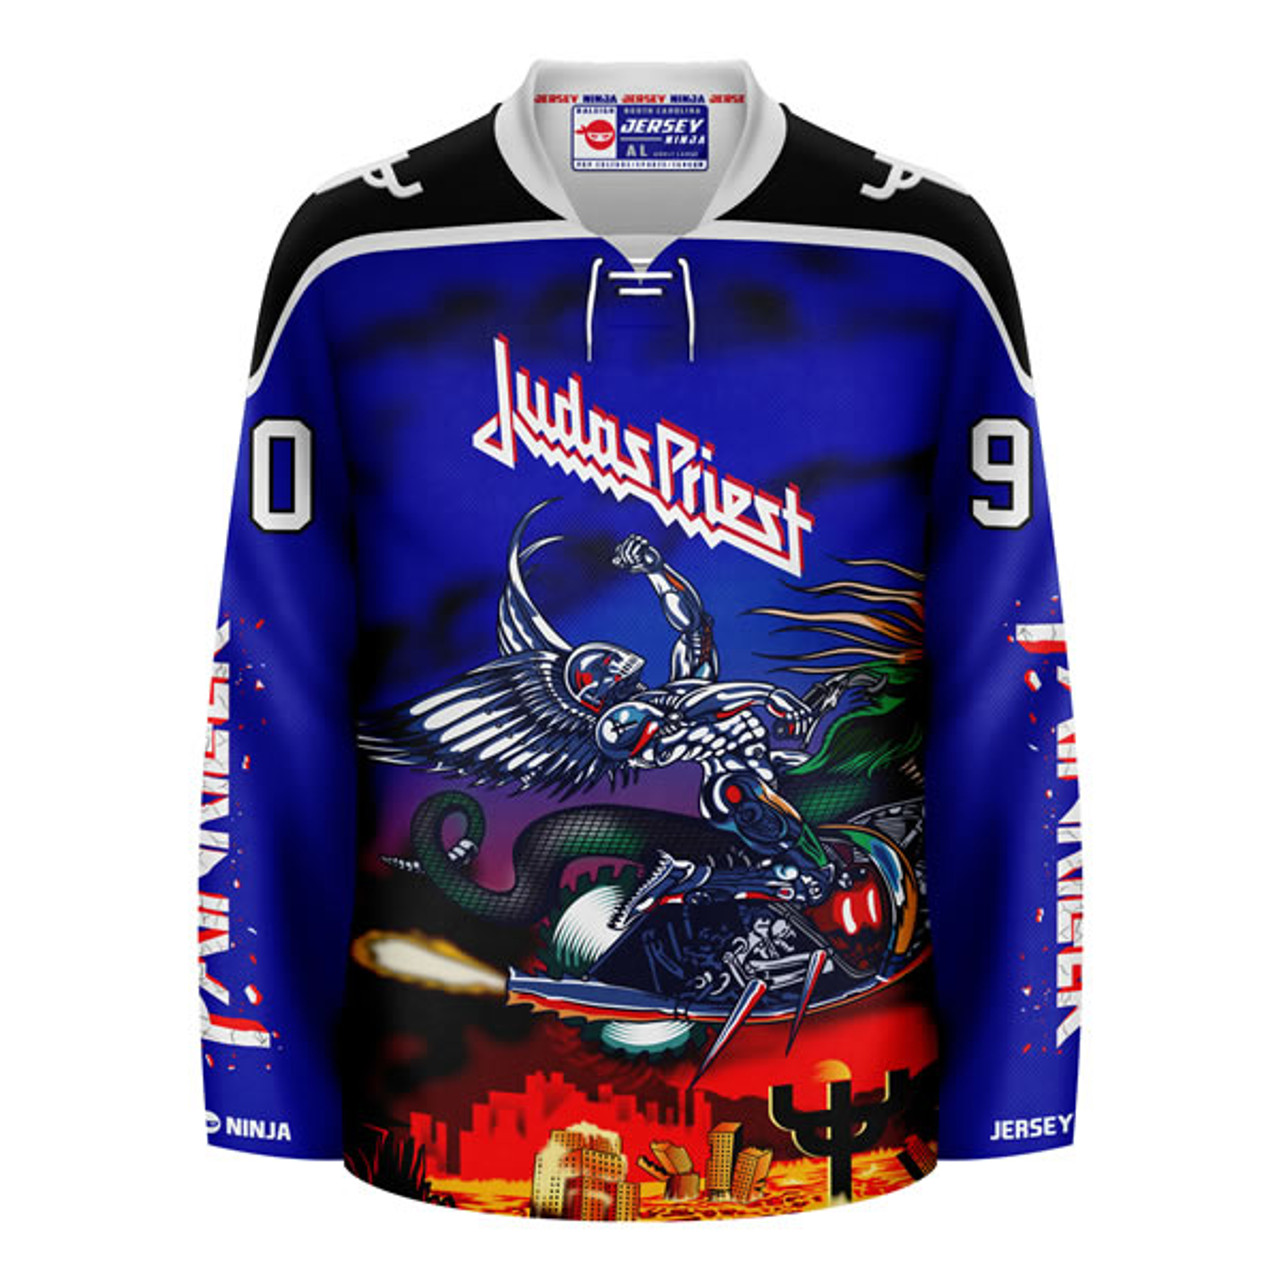 Jersey Ninja - Judas Priest Angel of Retribution SUB Hockey Jersey